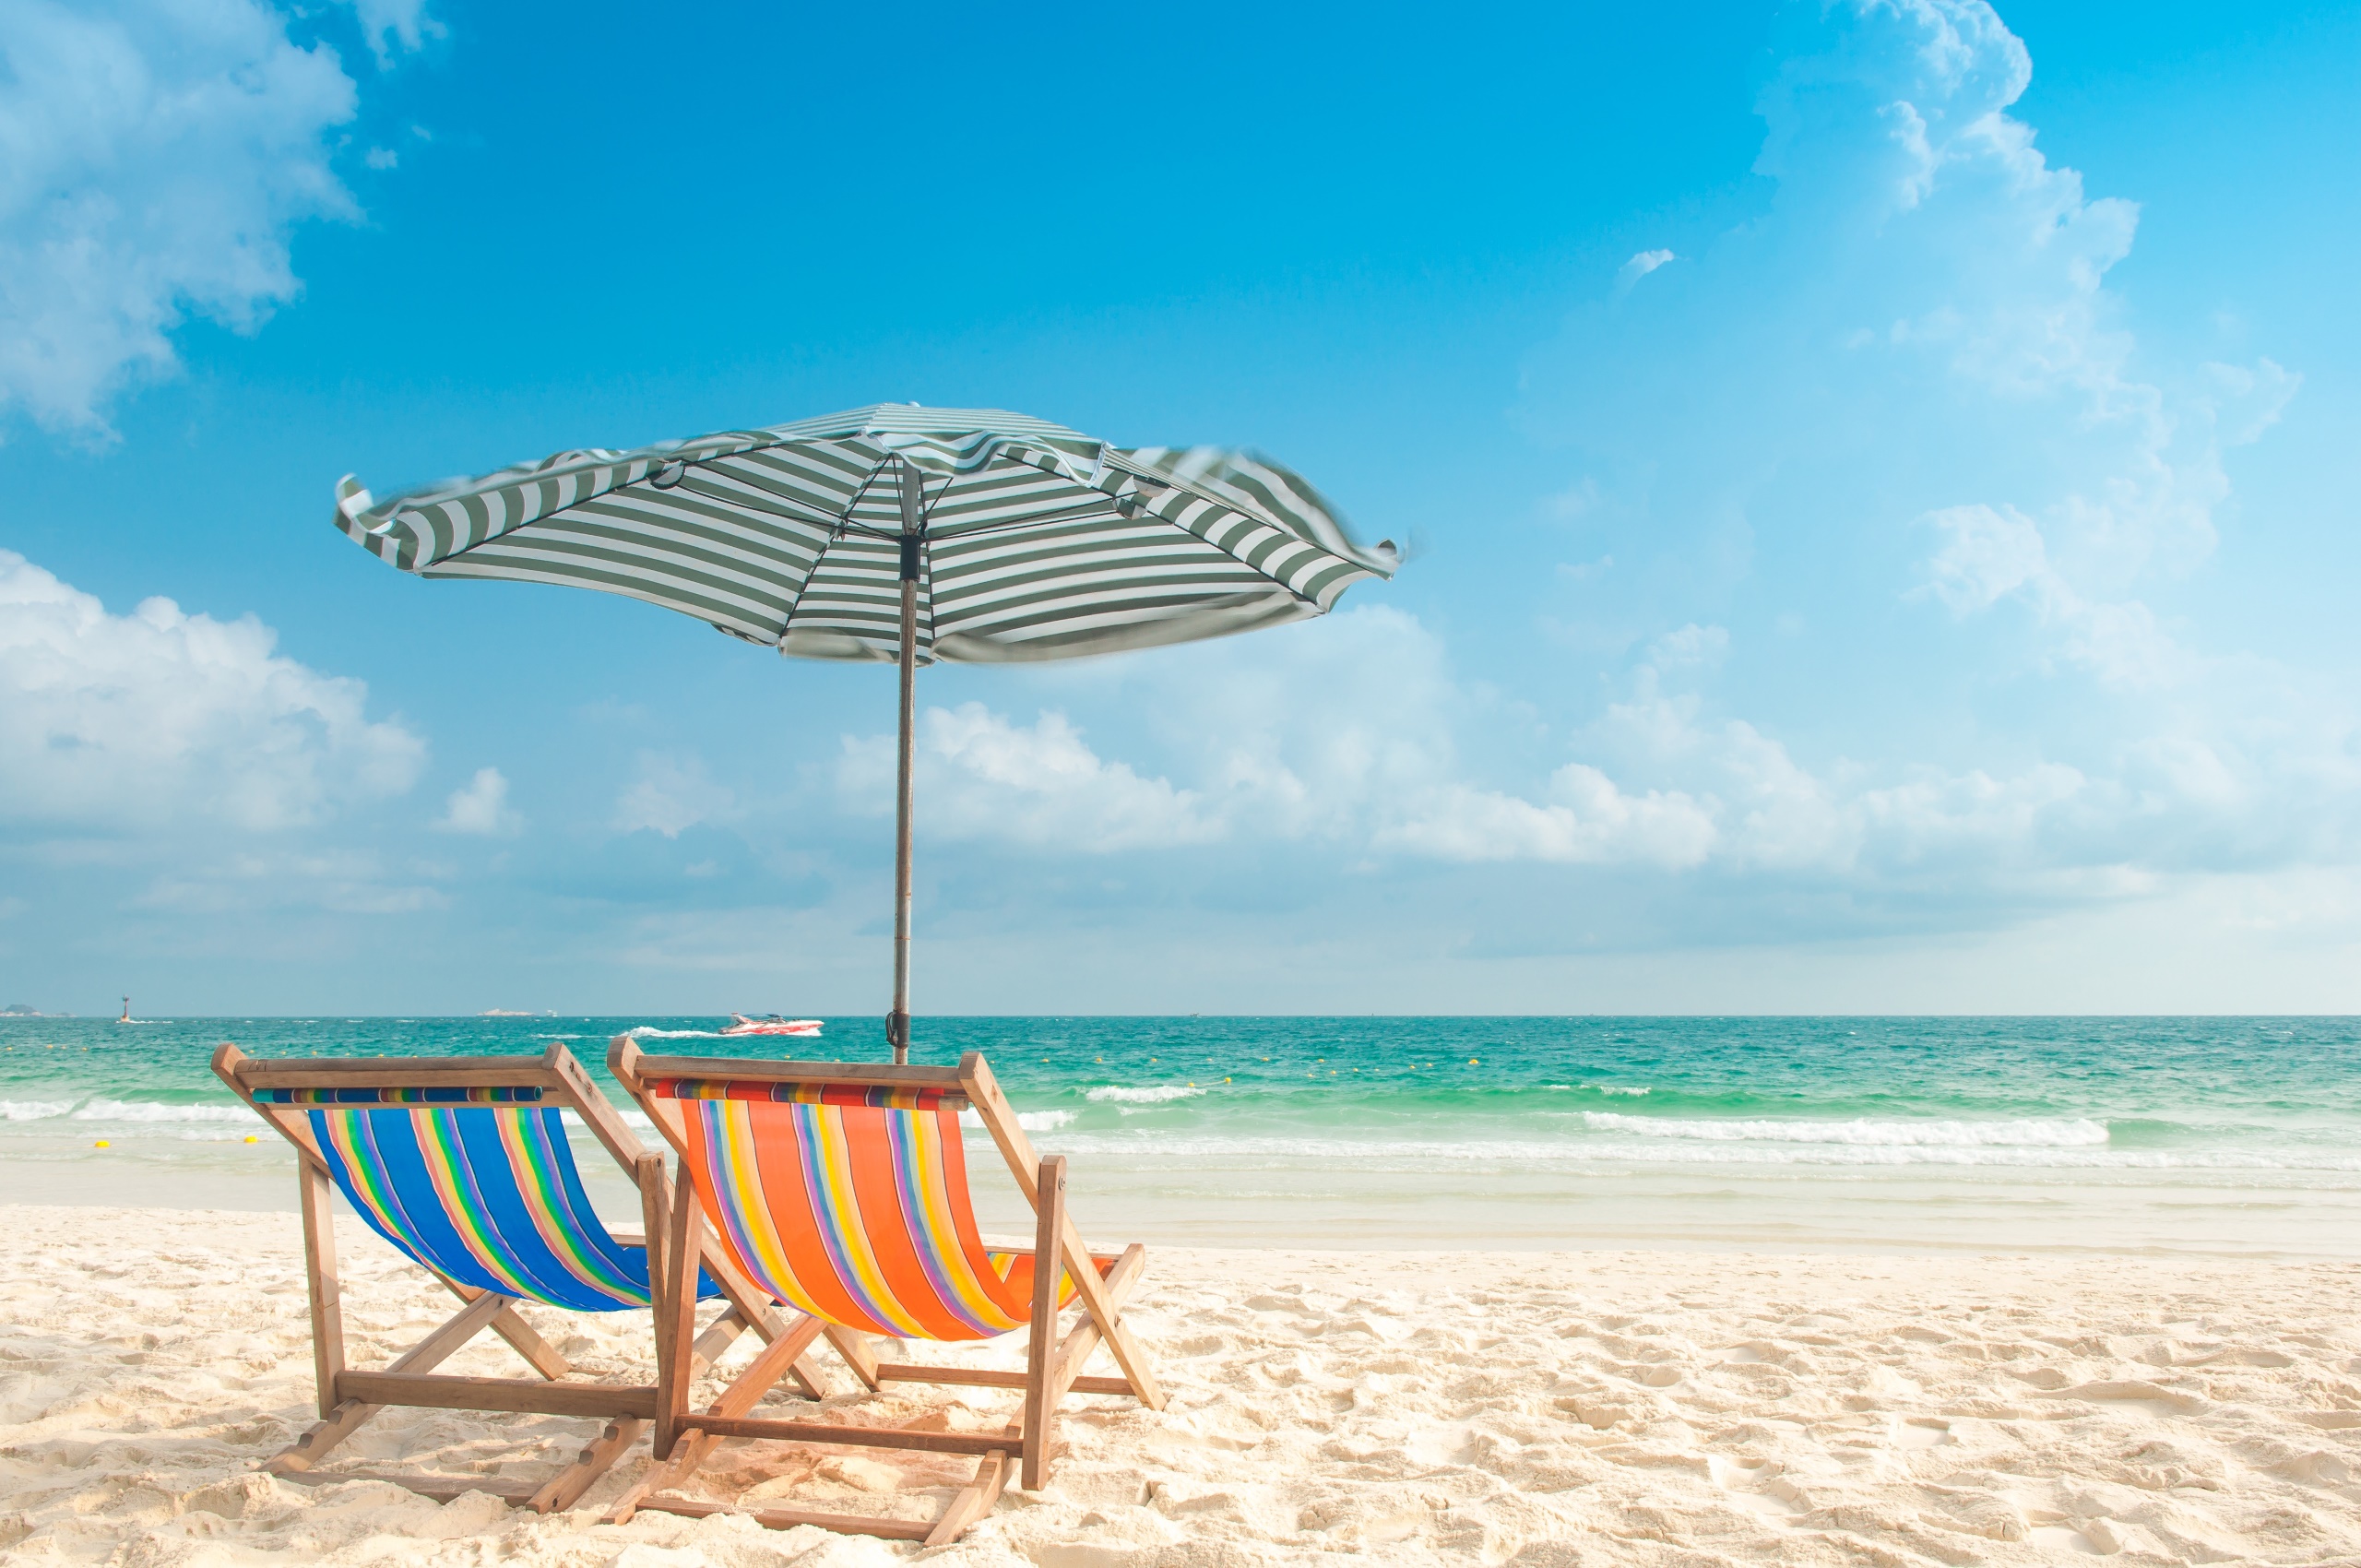 General 2560x1700 outdoors beach sea sky horizon deck chairs umbrella